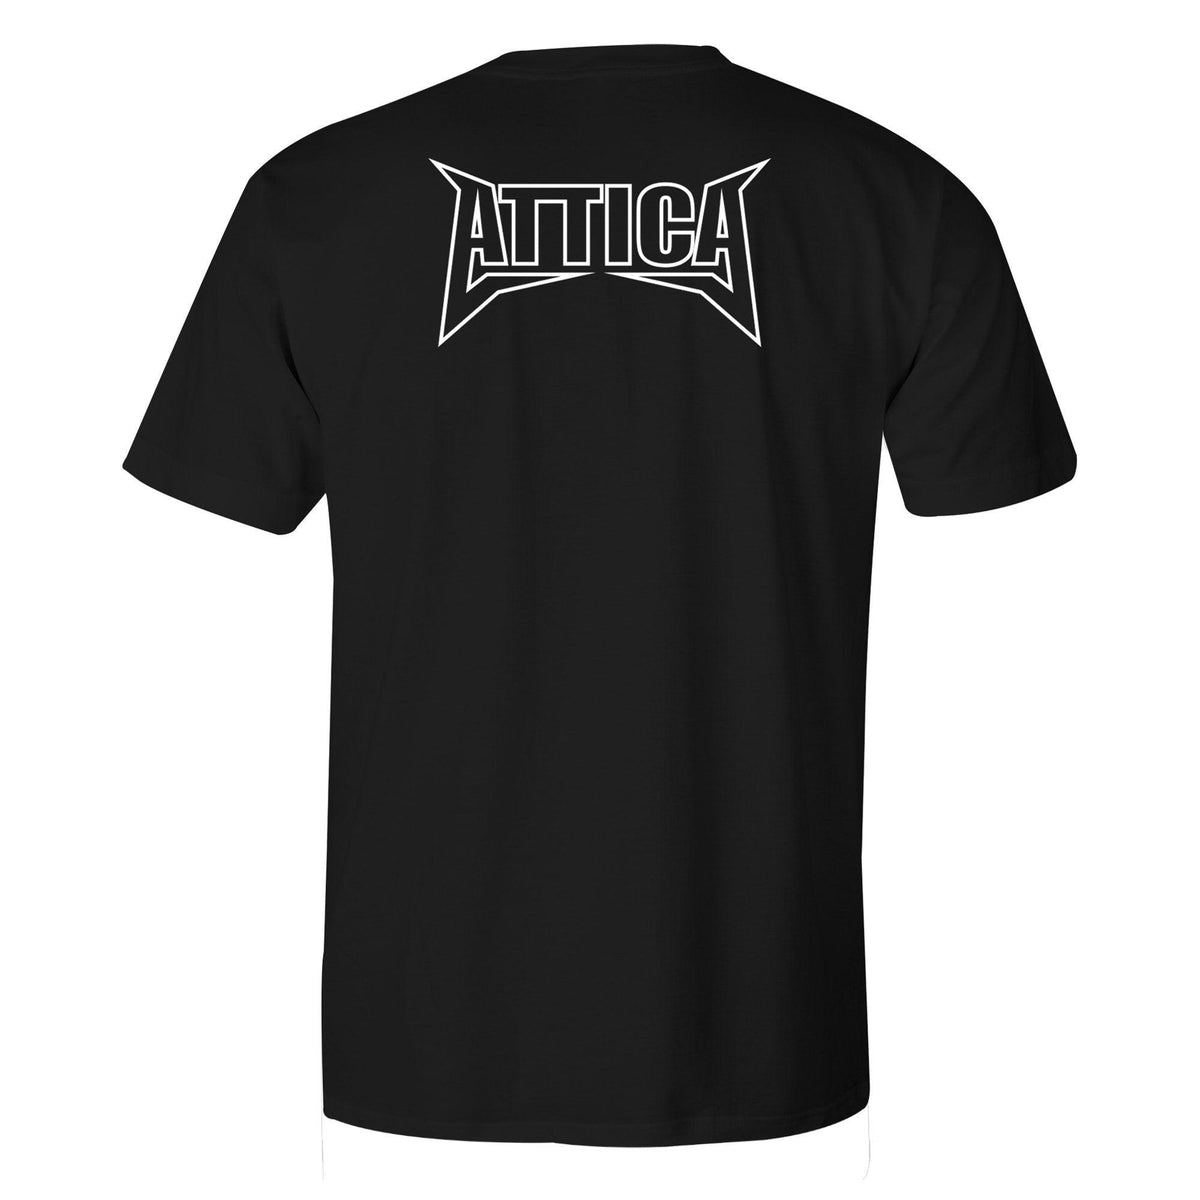 ATTICA 'Mental' T-Shirt - Black - Funkshen Bodyboards